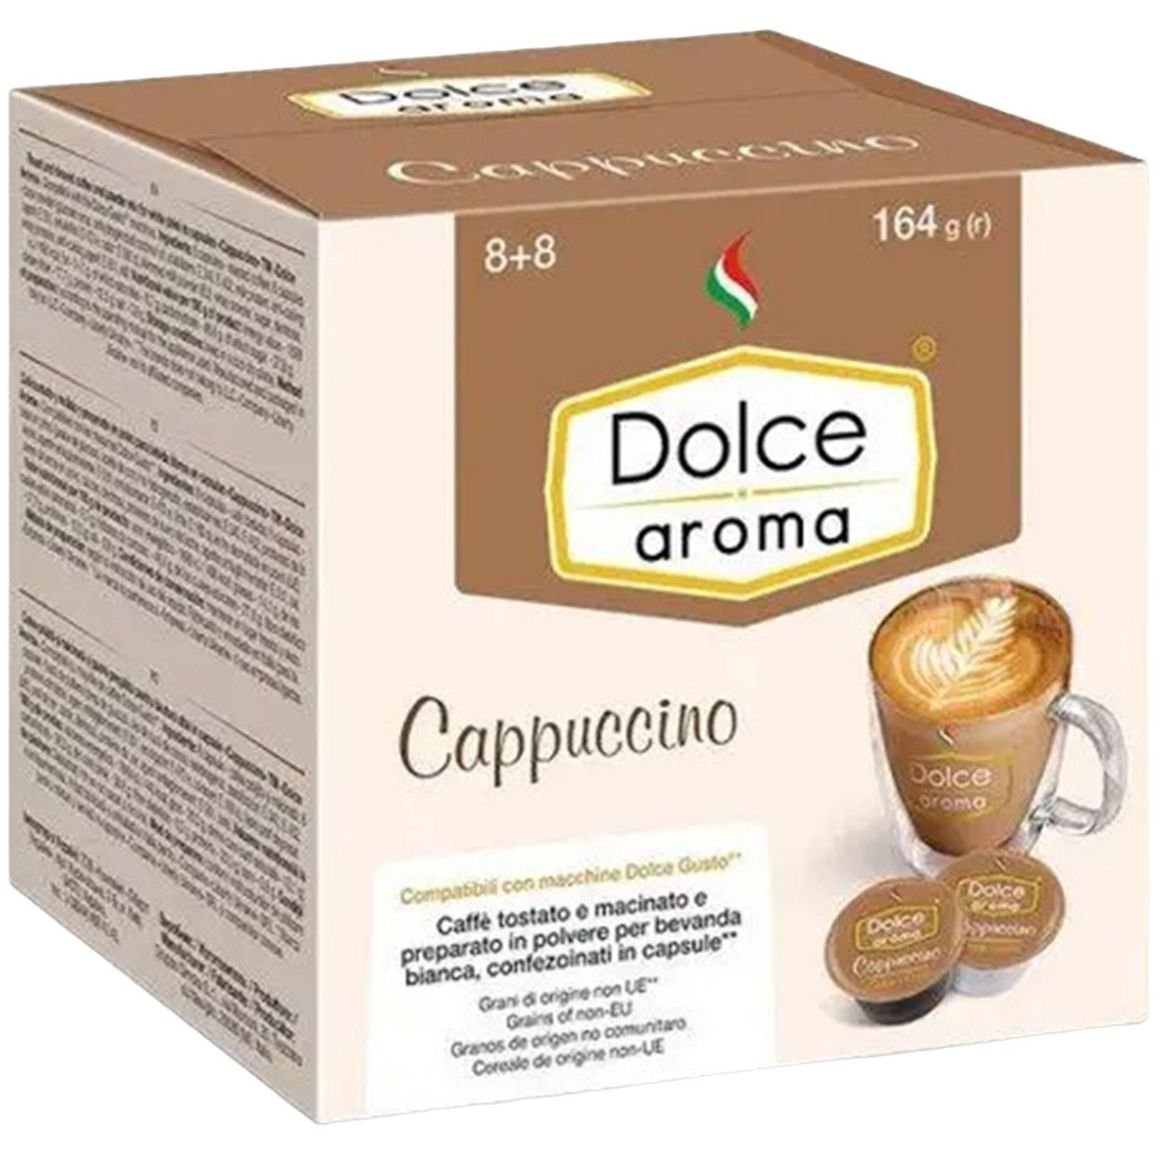 Кофе в капсулах Dolce Aroma Cappuccino Dolce Gusto 16 капсул 164 г (881652) - фото 1